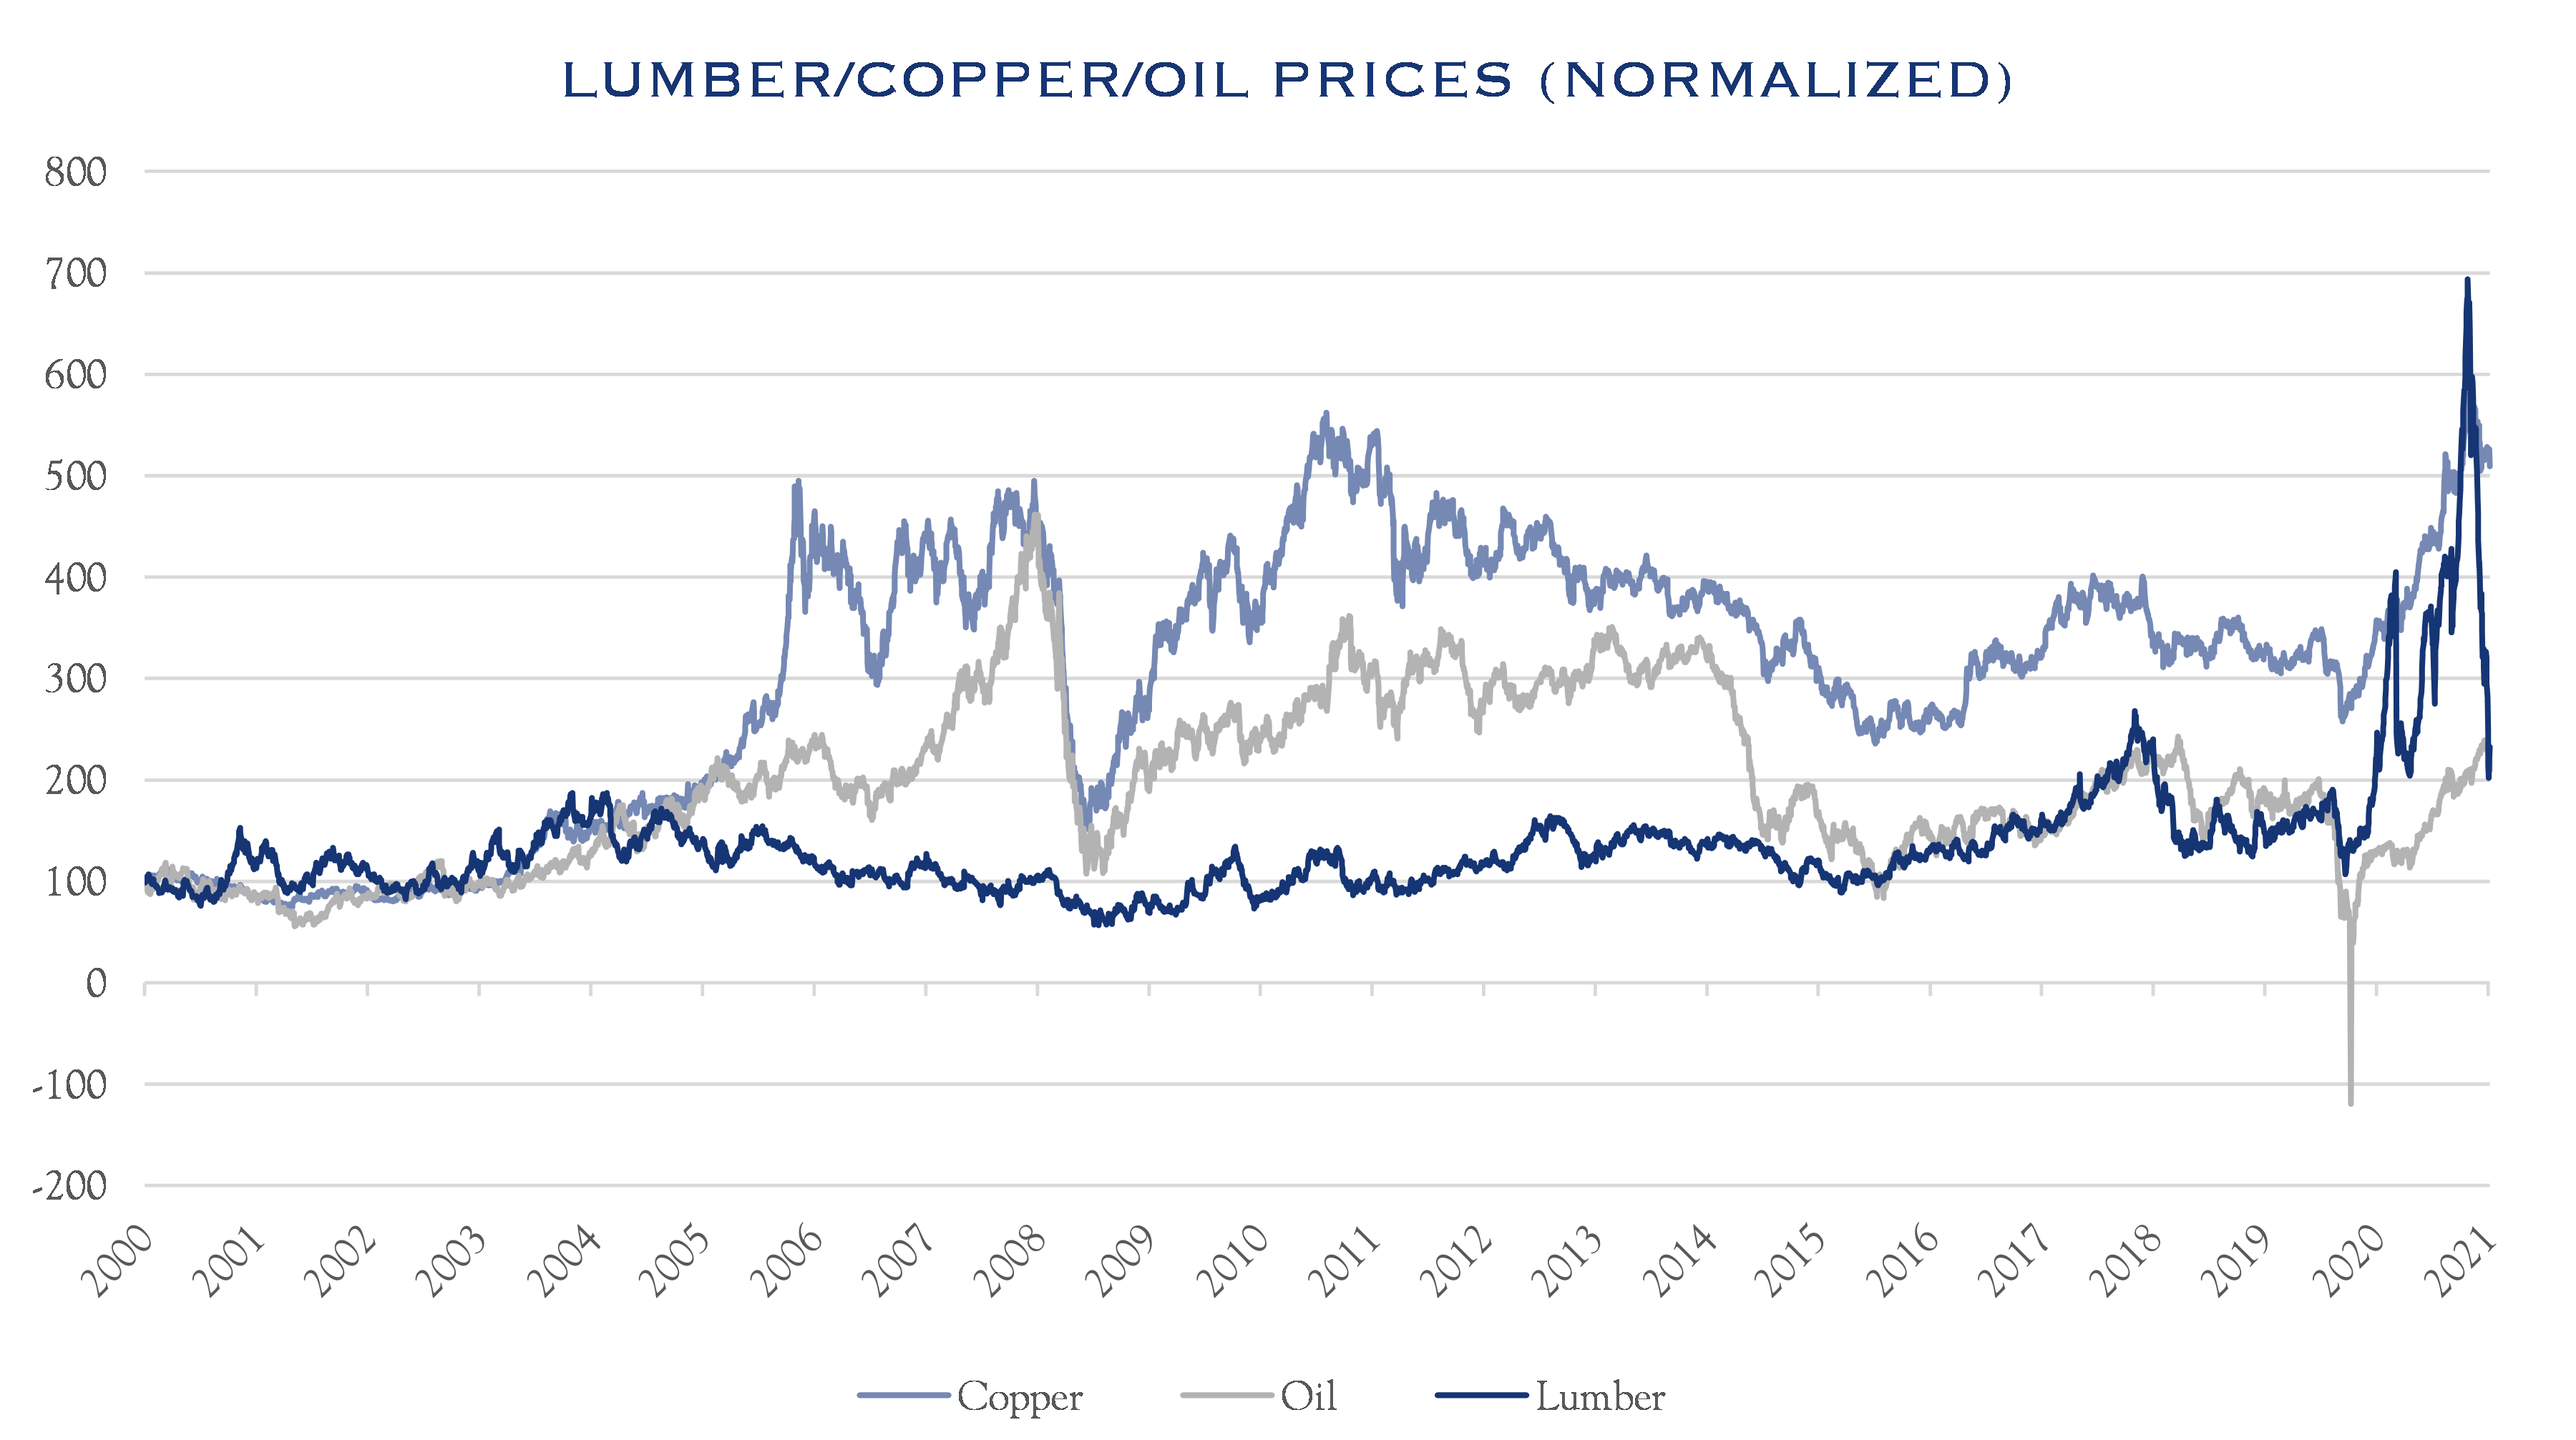 Lumber/Copper/Oil Prices